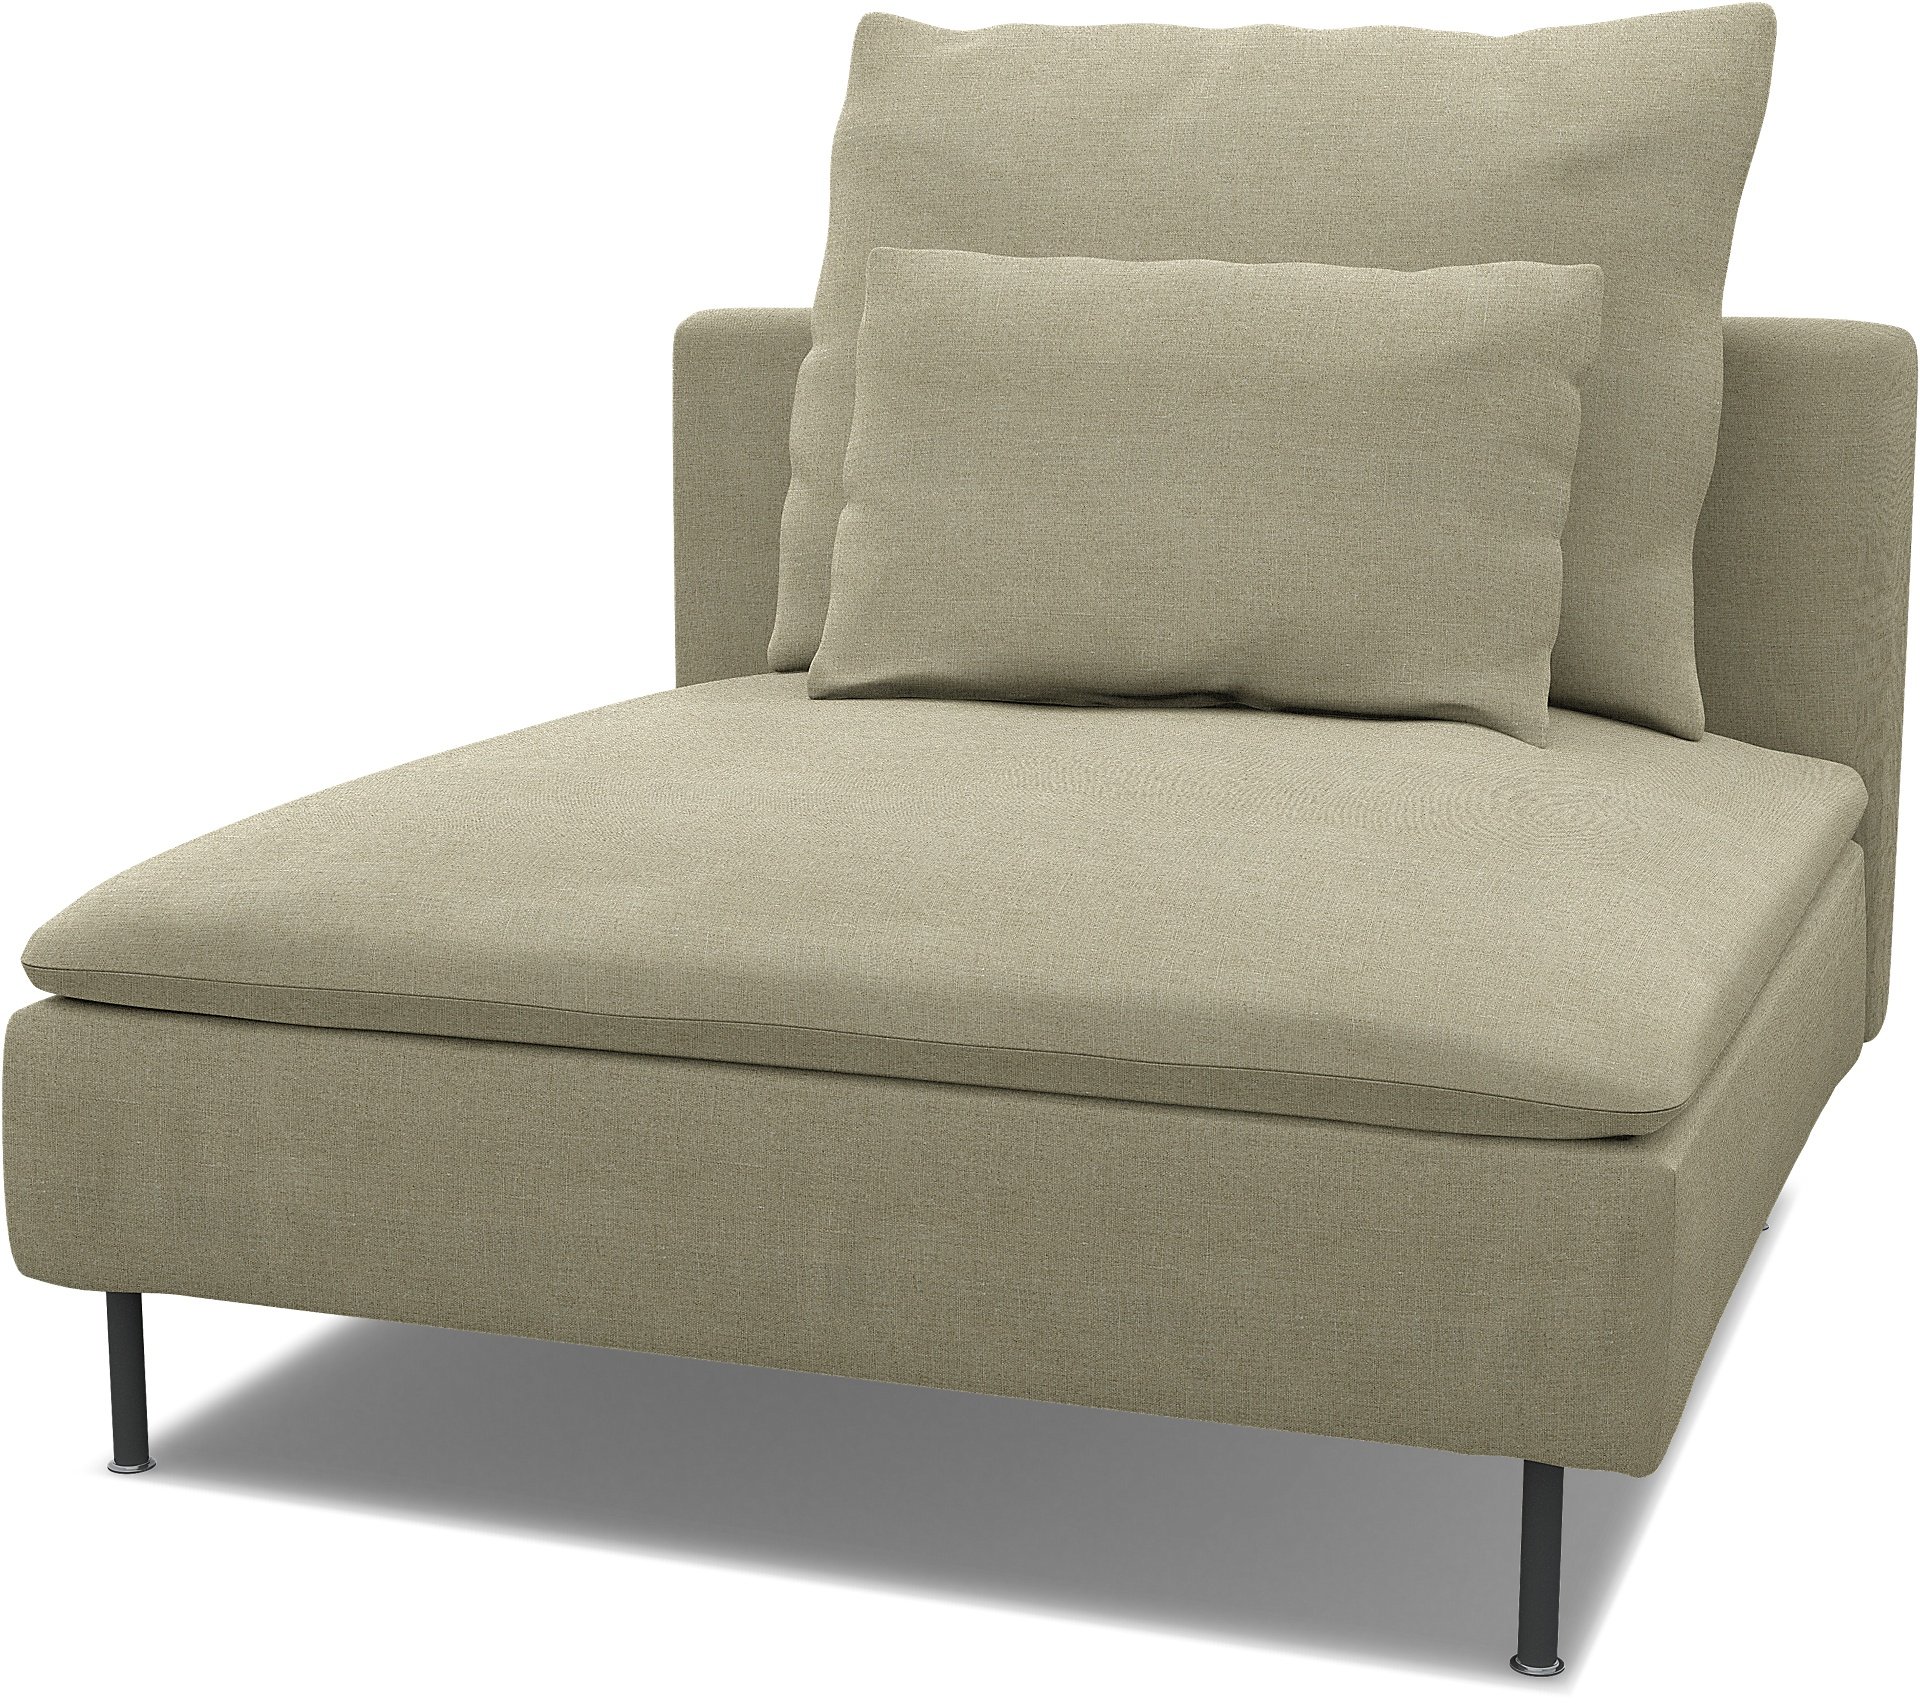 Spare back cushion cover for SODERHAMN 1 SEAT SECTION, Pebble, Linen - Bemz